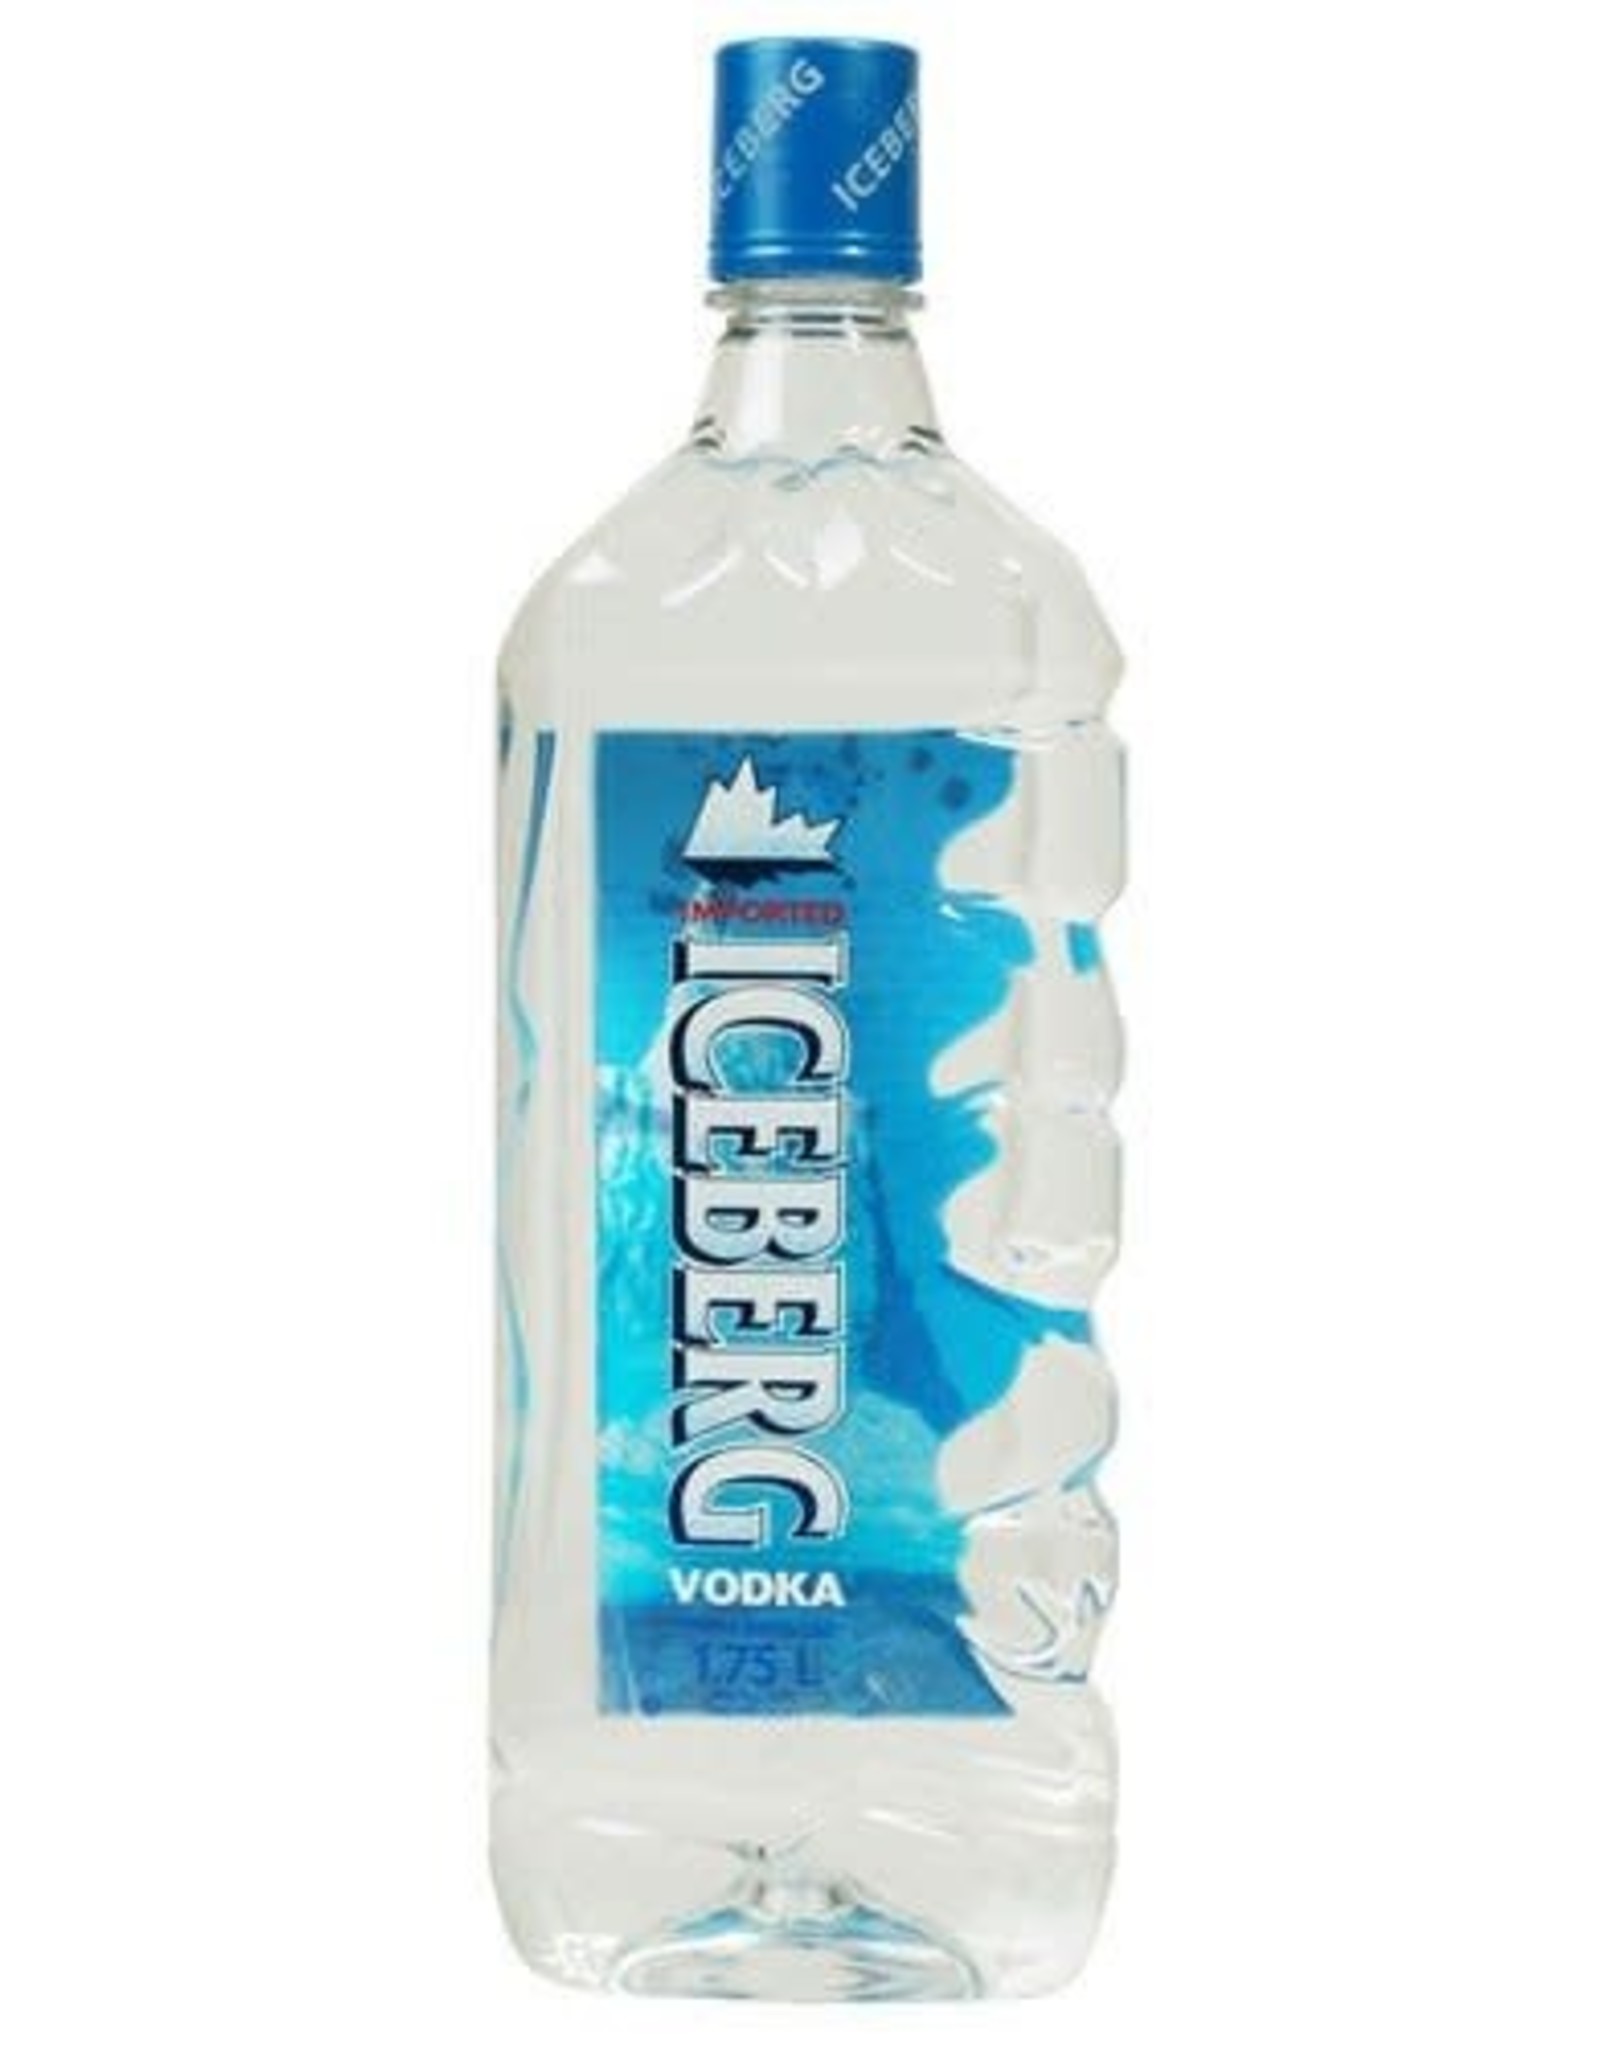 Iceberg Iceberg Vodka 1.75L